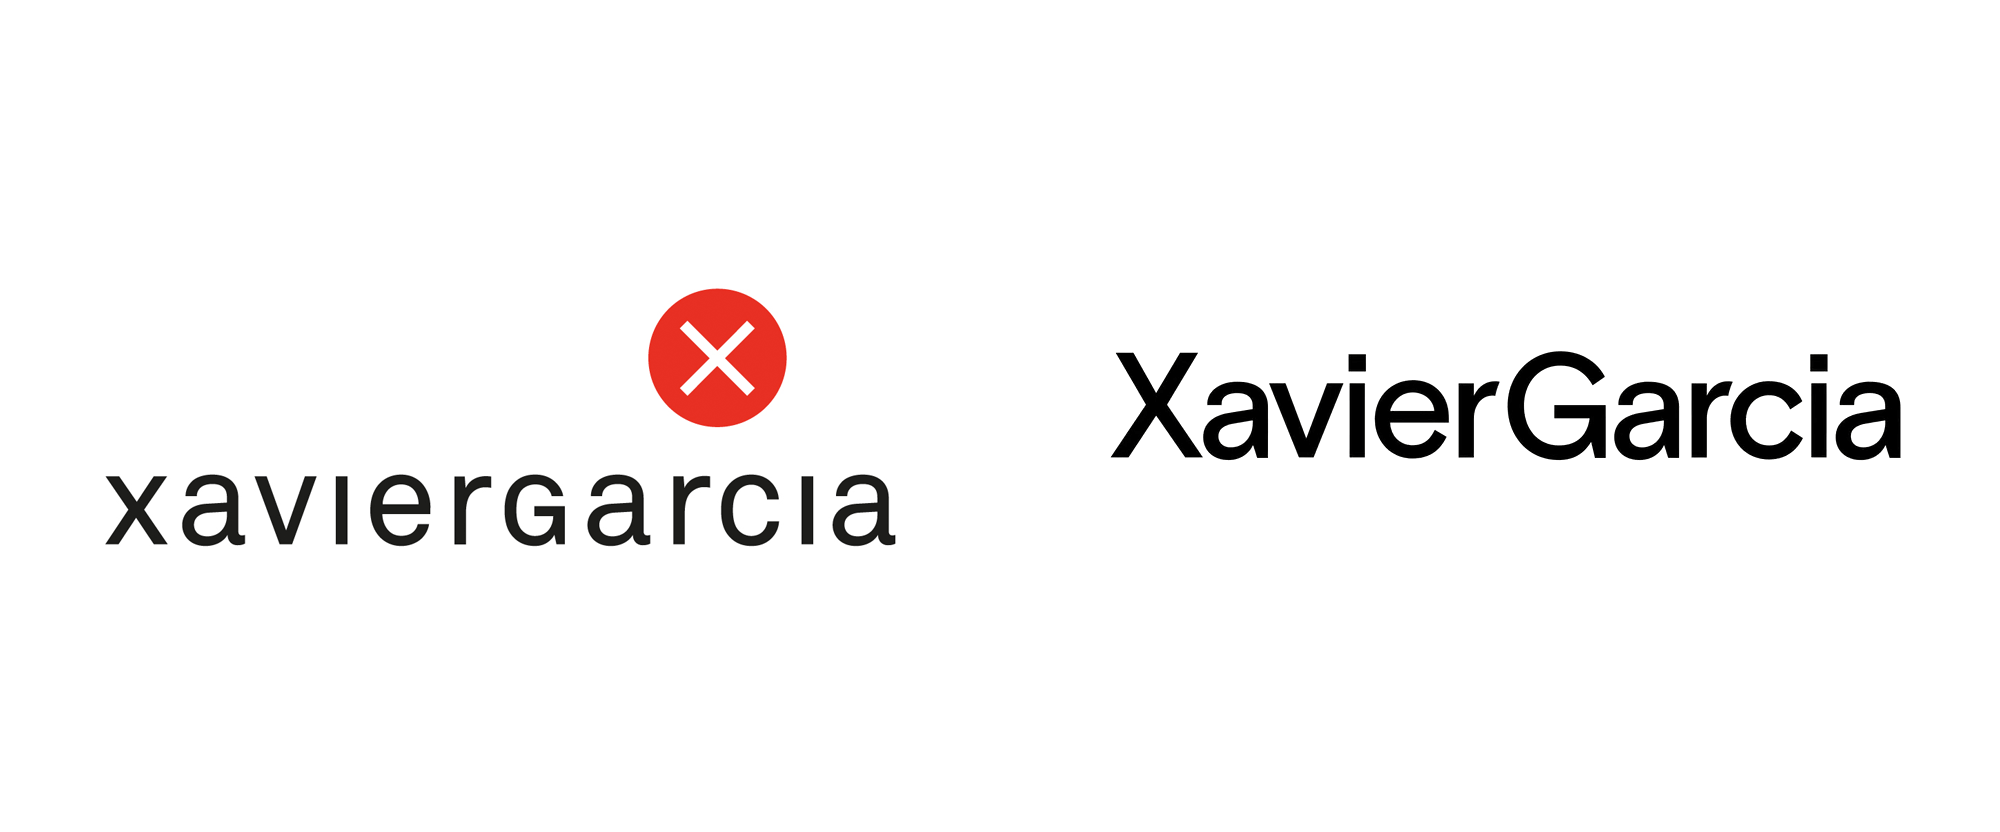 Garcia Logo - Brand New: New Logo and Identity for Xavier Garcia